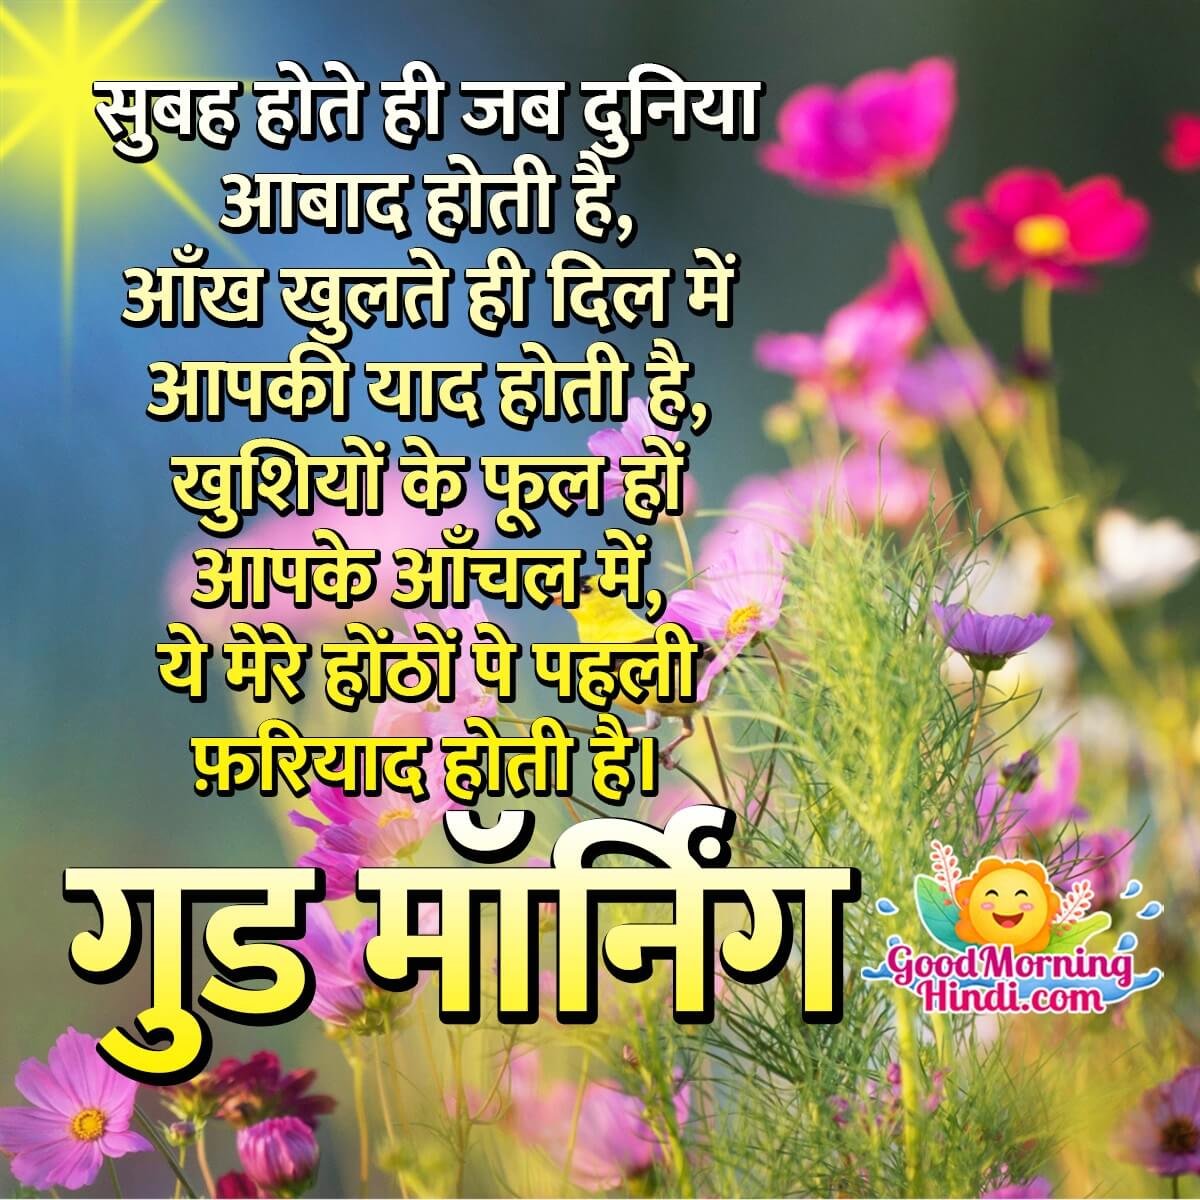 Best Good Morning Shayari In Hindi - Good Morning Wishes & Images ...